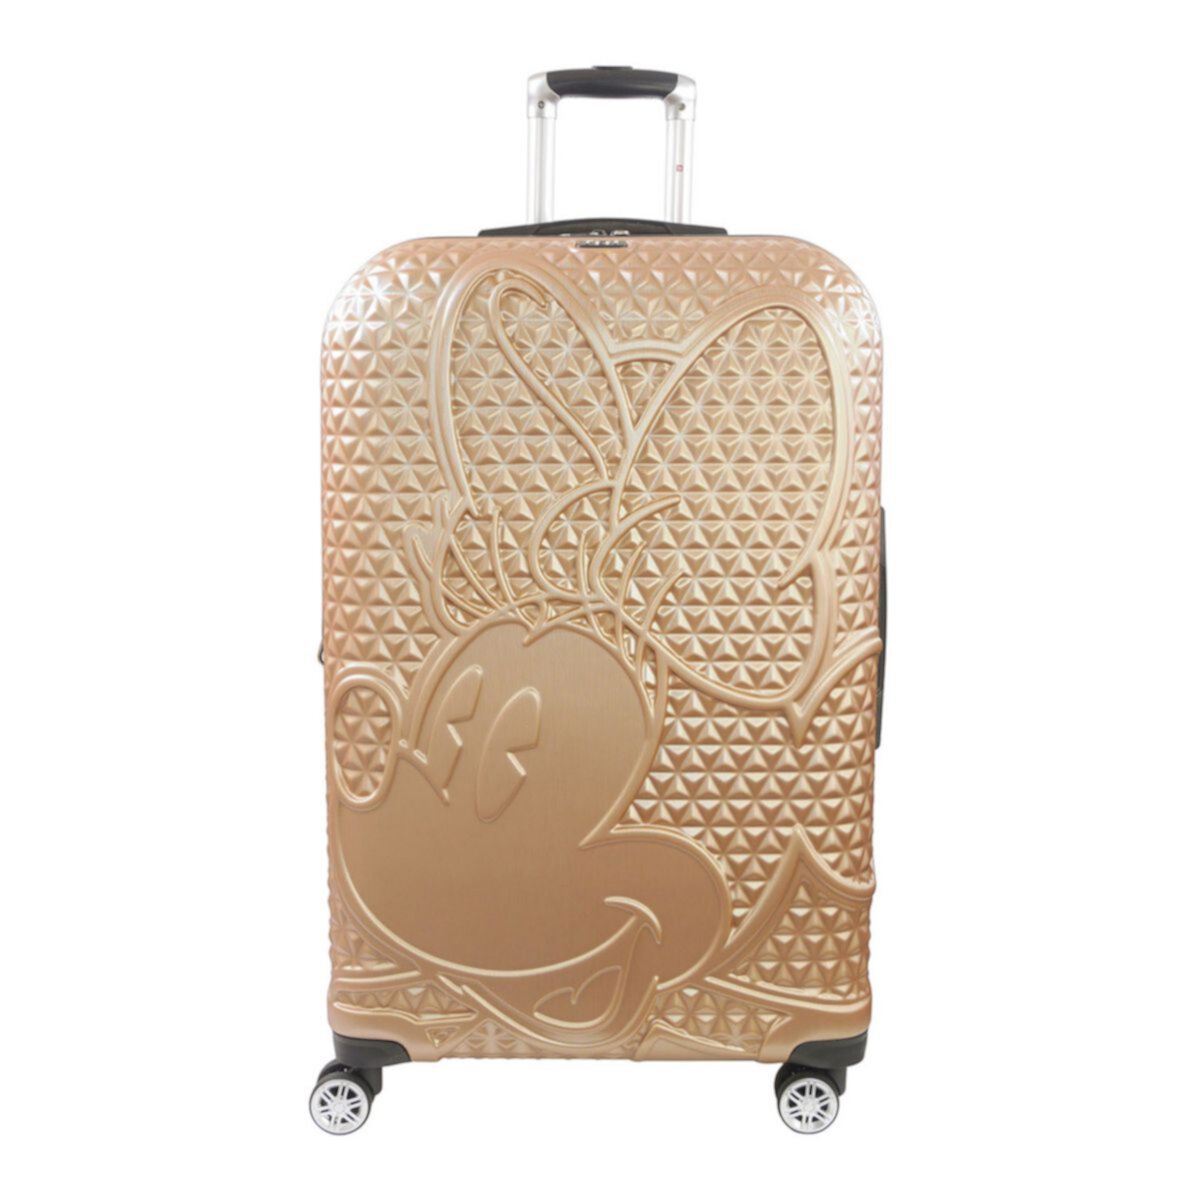 ful Disney's Minnie Mouse Текстурированный чемодан-спиннер с жестким бортом FUL